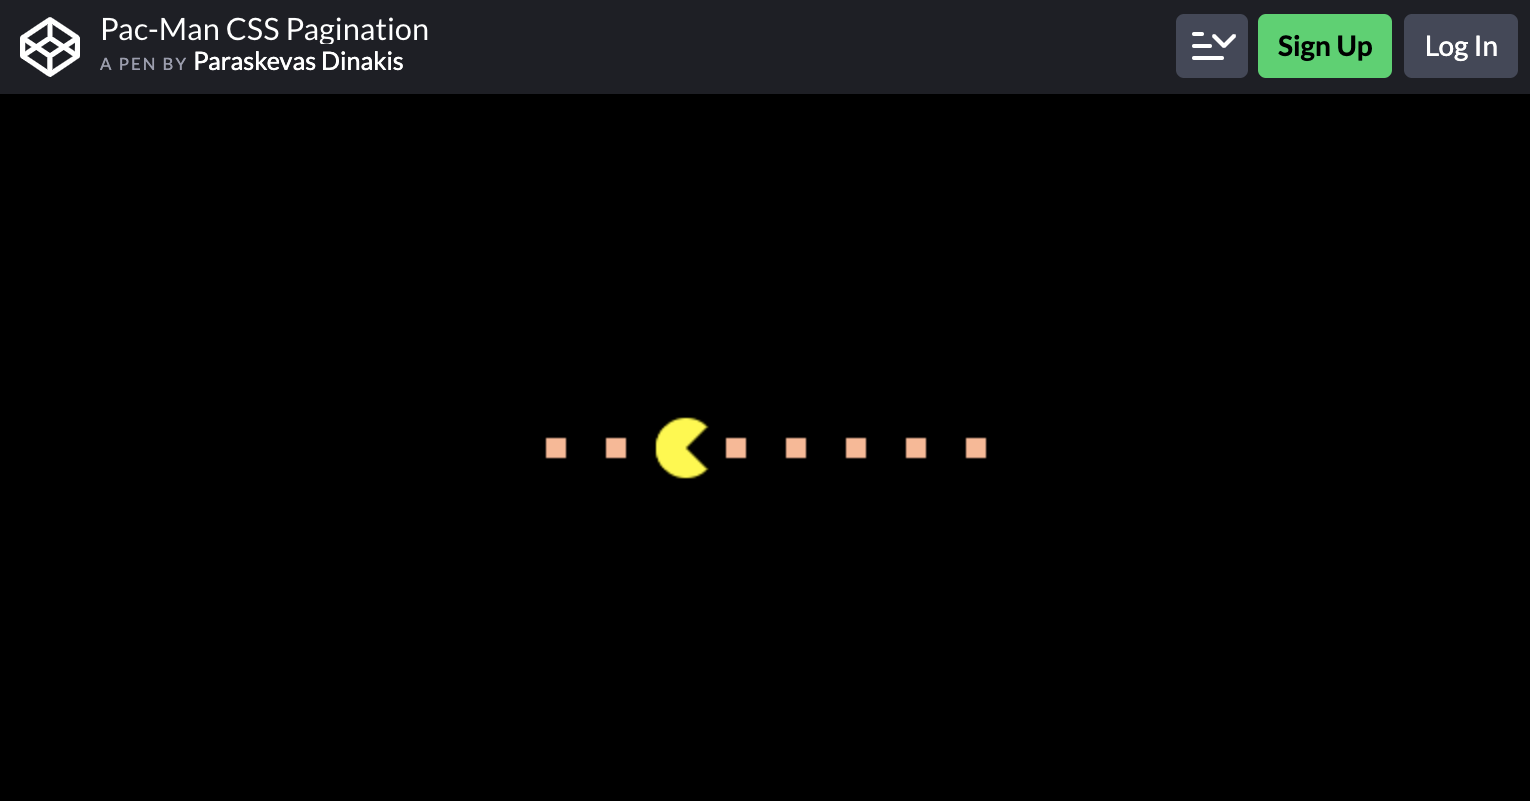 Pac-Man CSS Pagination